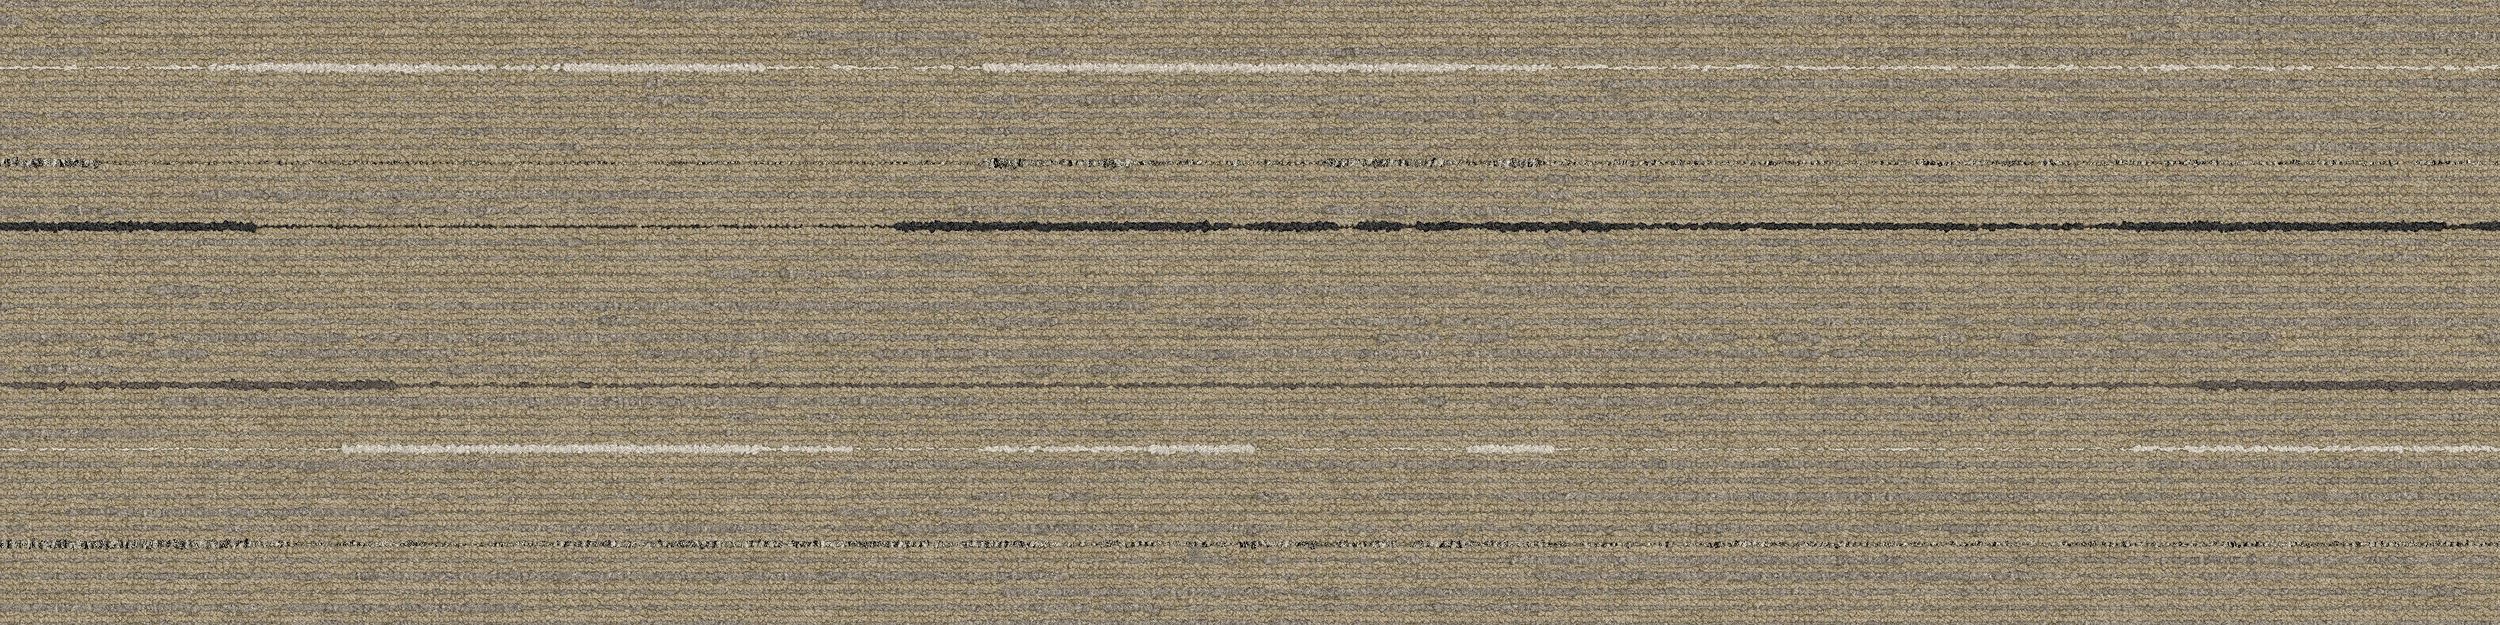 CE172 Carpet Tile In Haiku numéro d’image 2